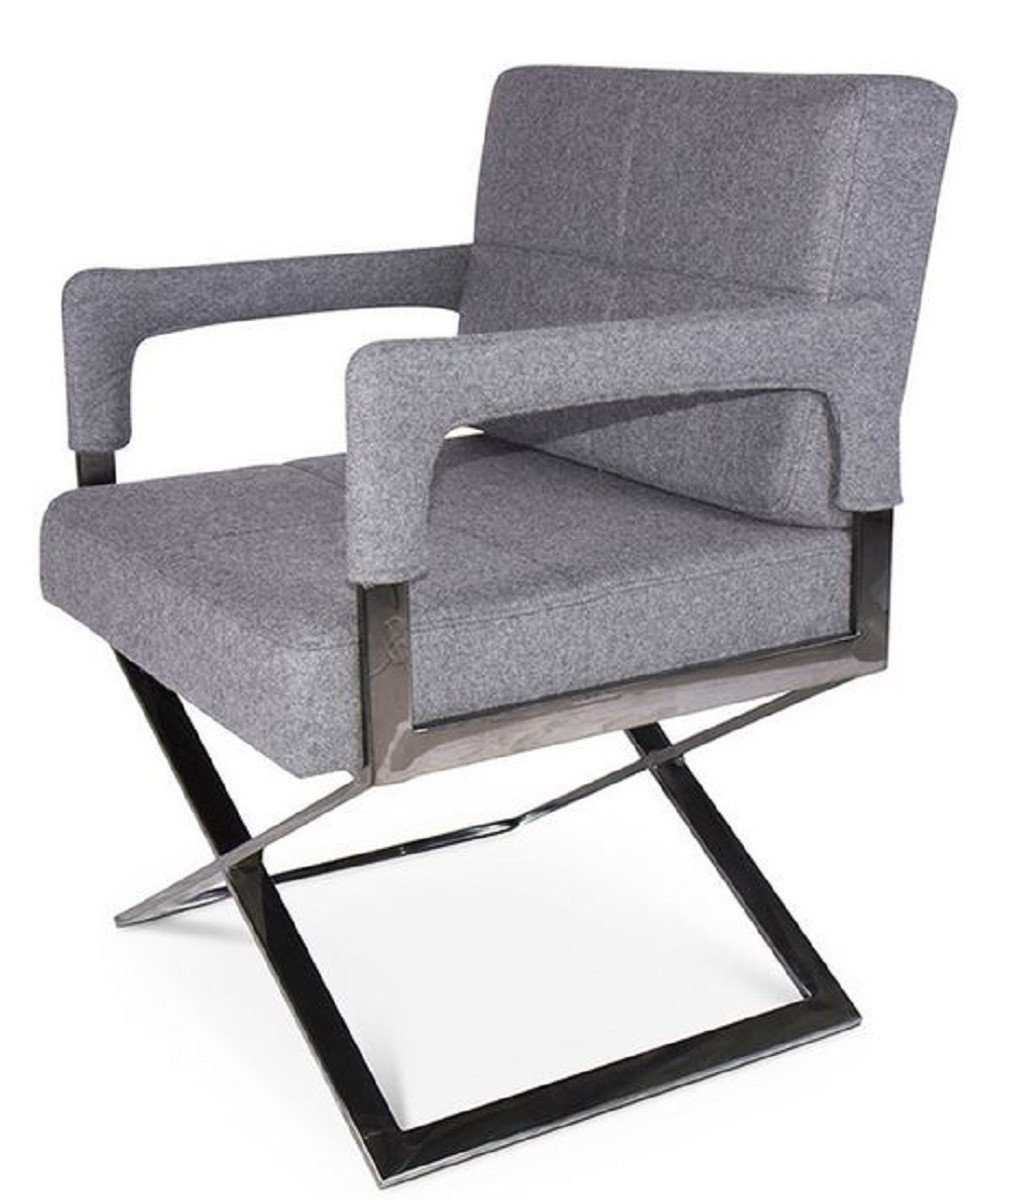 Casa Padrino Armlehnstuhl Luxus Stuhl mit Armlehnen Grau / Silber 60 x 66 x H. 89 cm - Gepolsteter Bürostuhl - Büromöbel